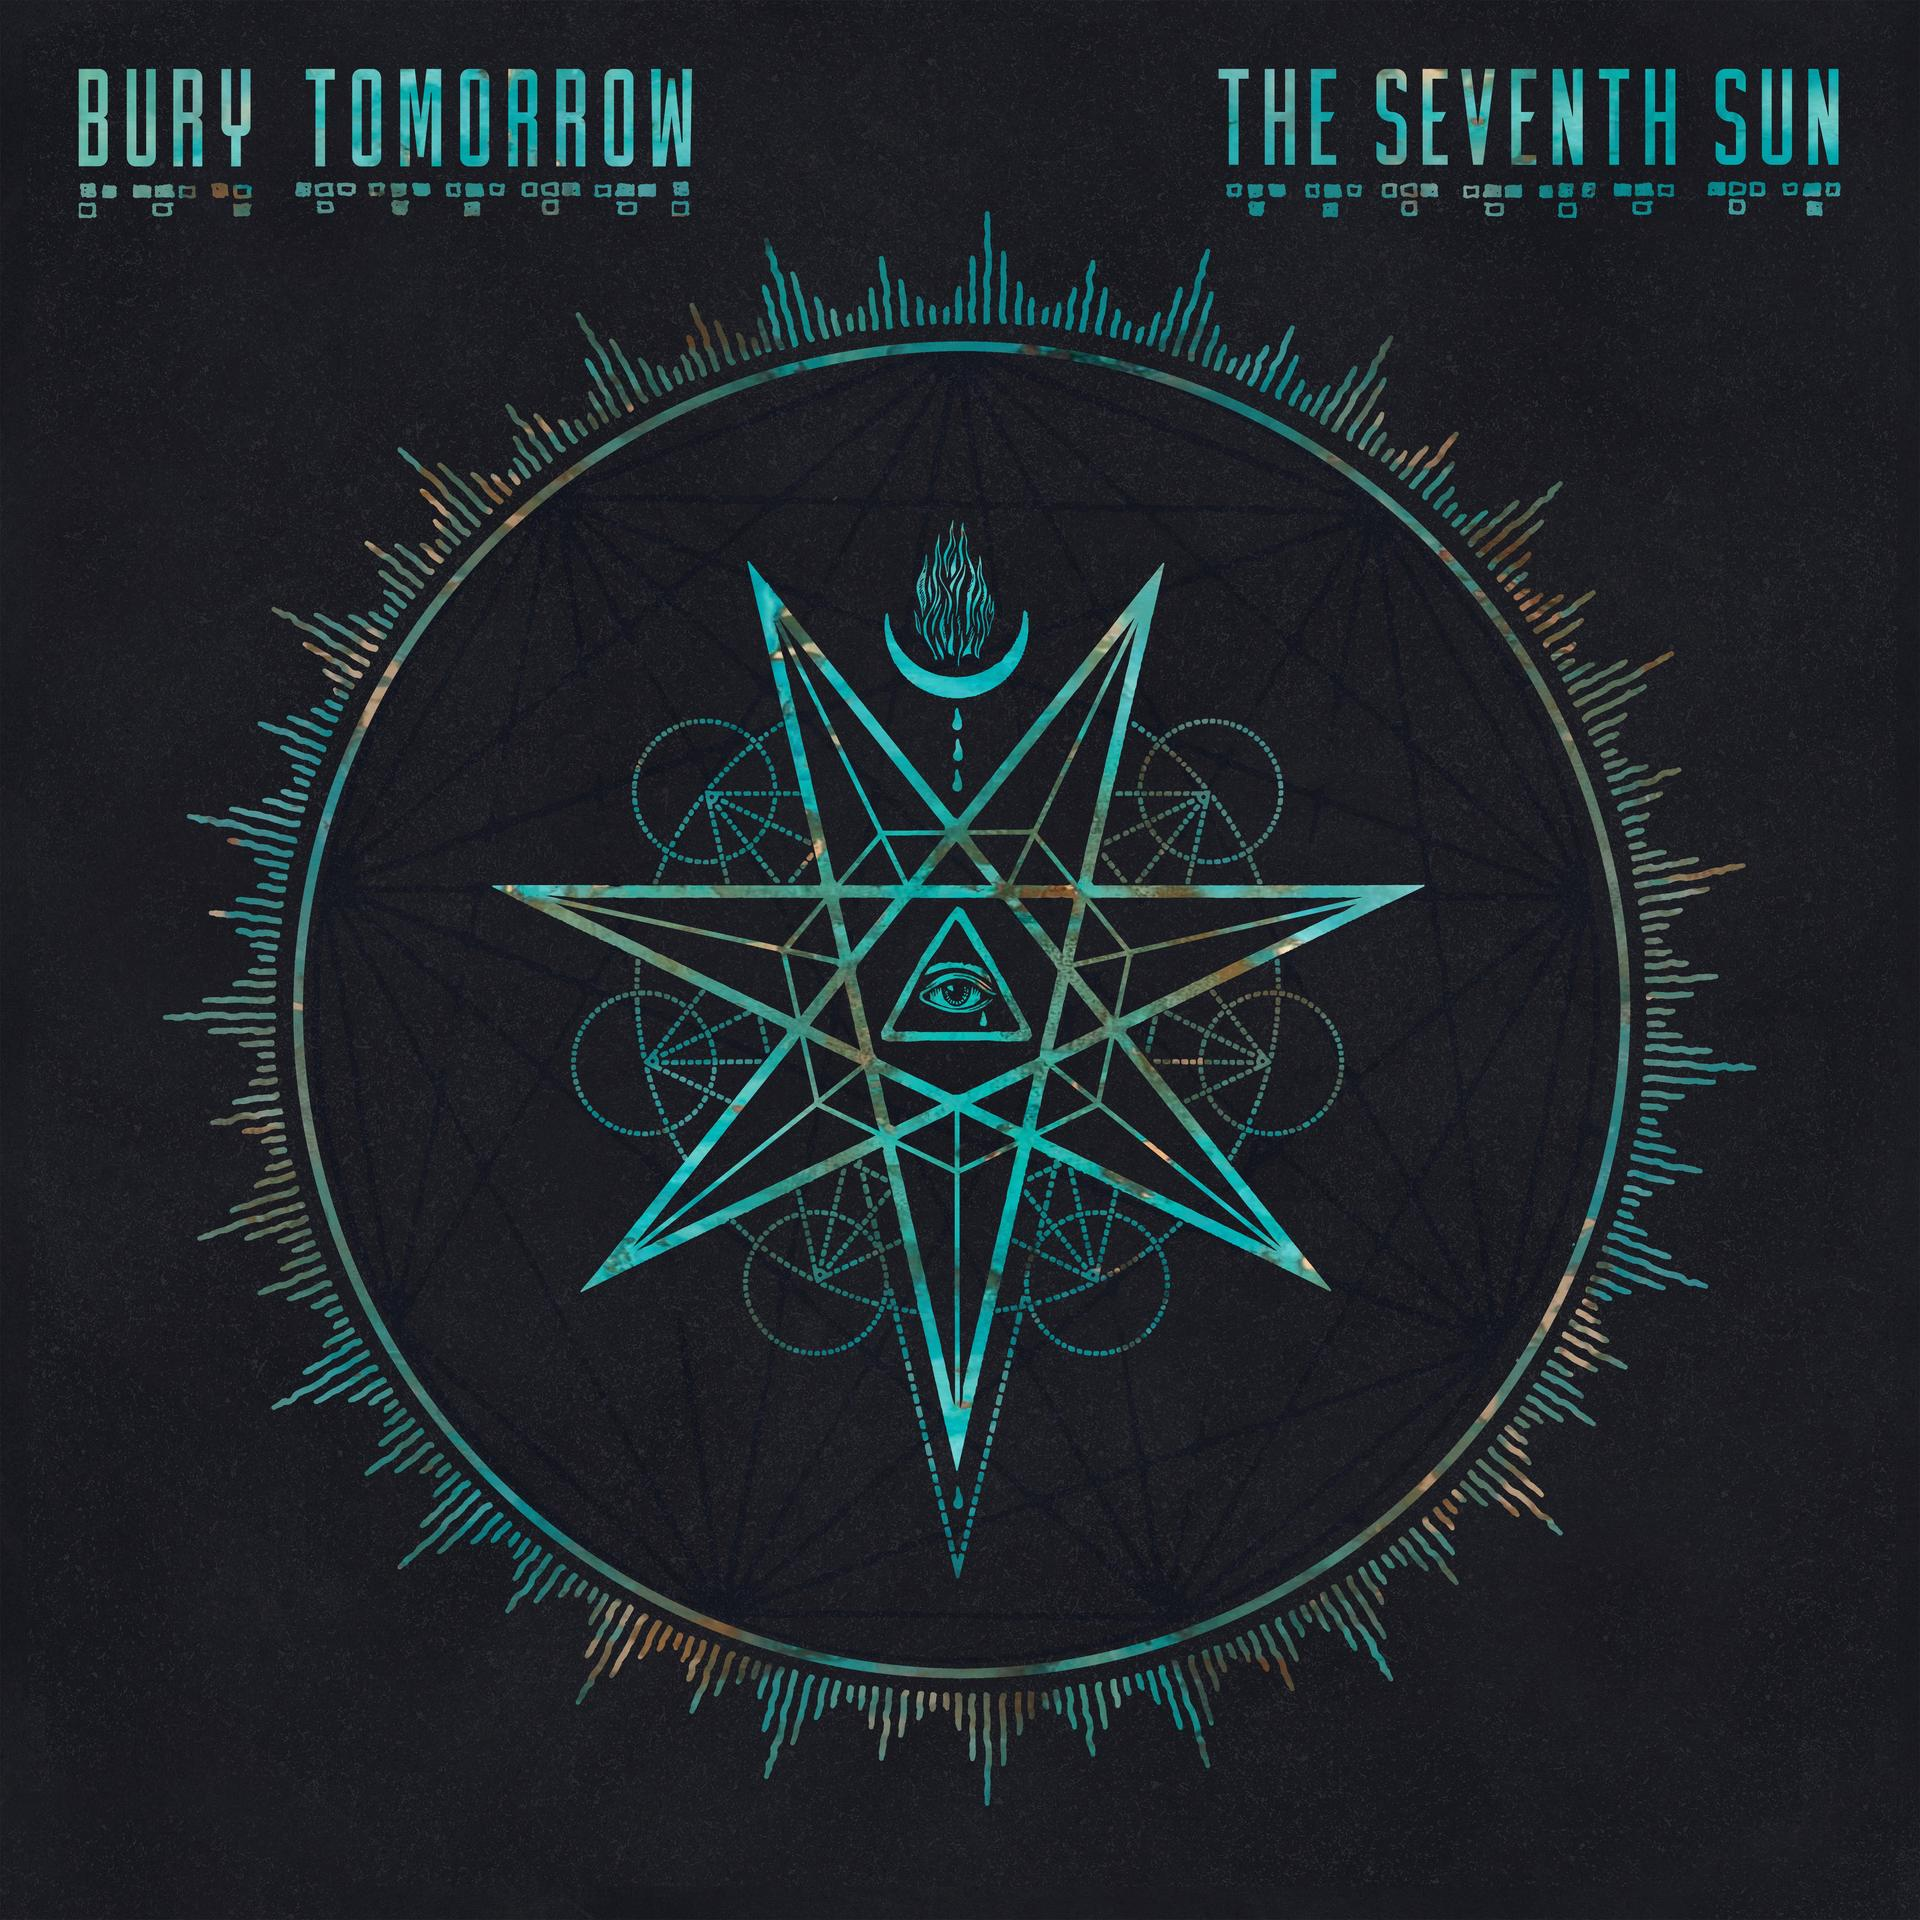 - (CD) (Deluxe) Seventh The Tomorrow Bury Sun -